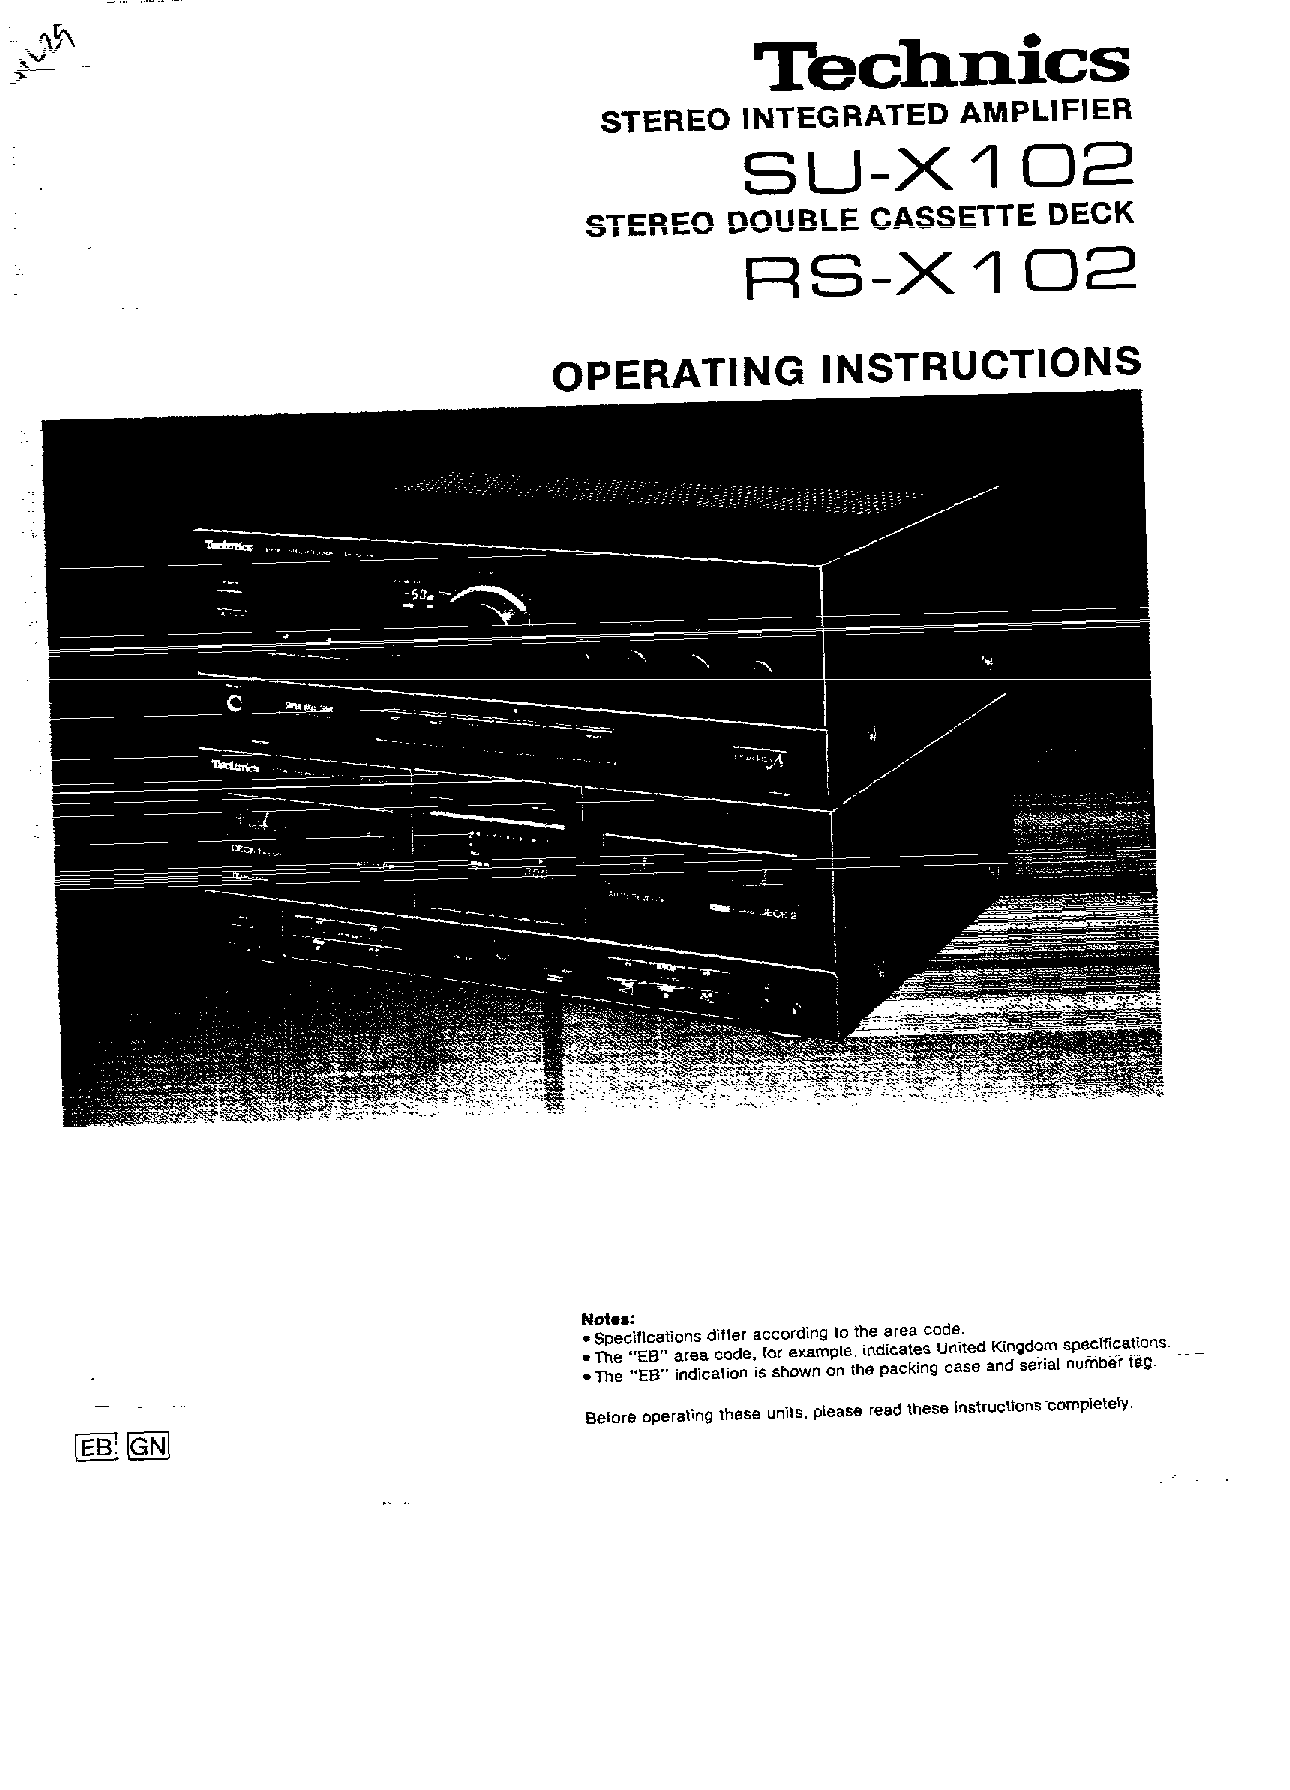 Panasonic SU-X102 User Manual